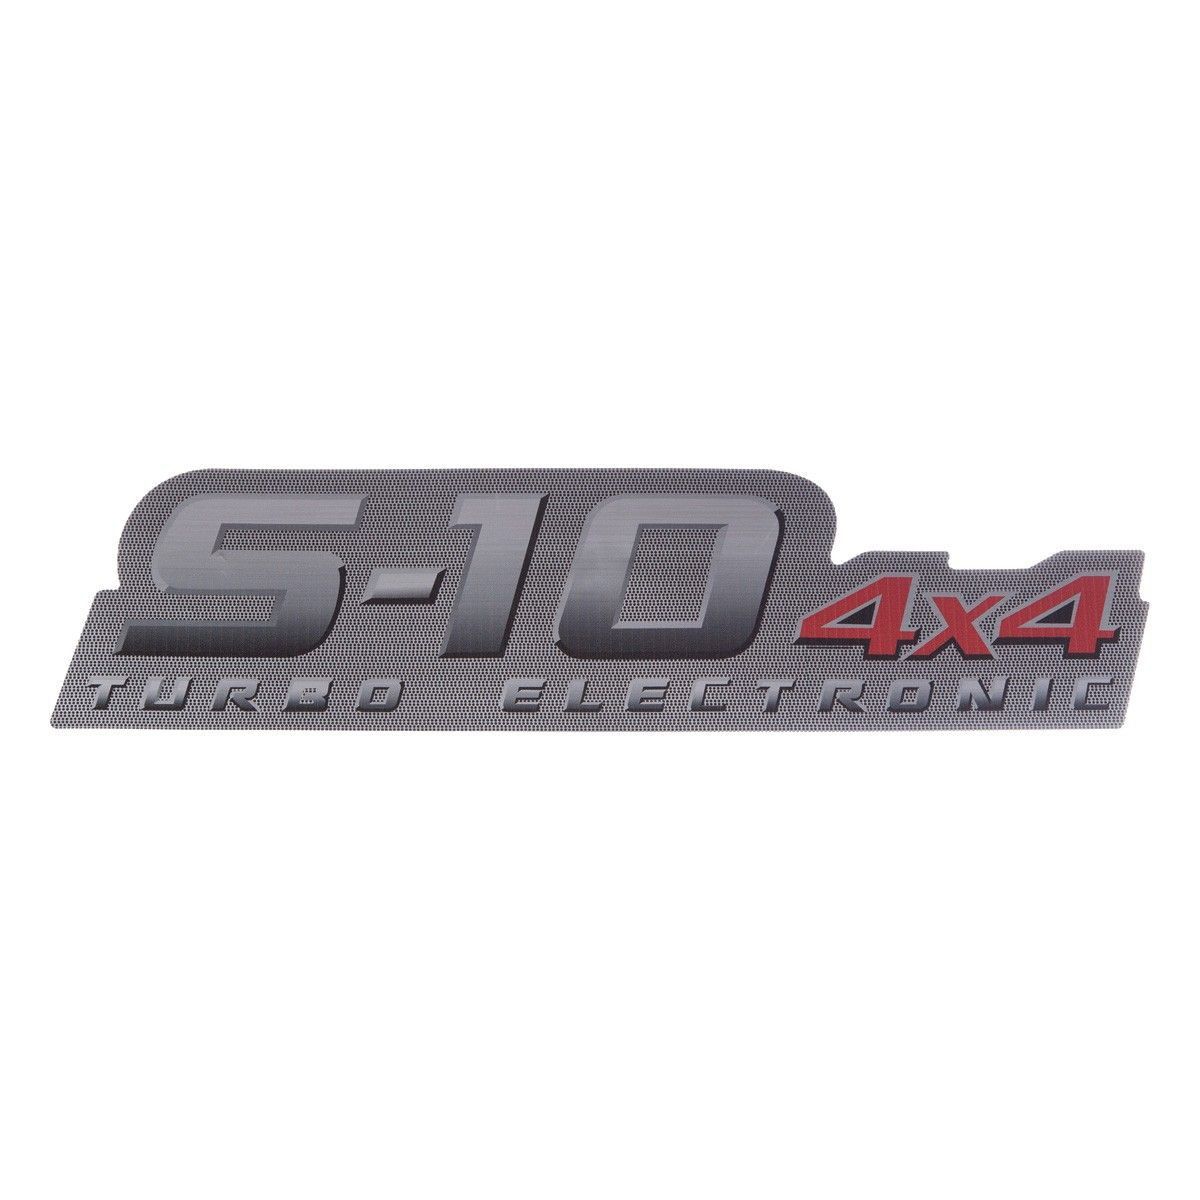 Emblema *S100 4x4 turbo eletronic* lateral cacamba - S10 2.8 2009 a 2011